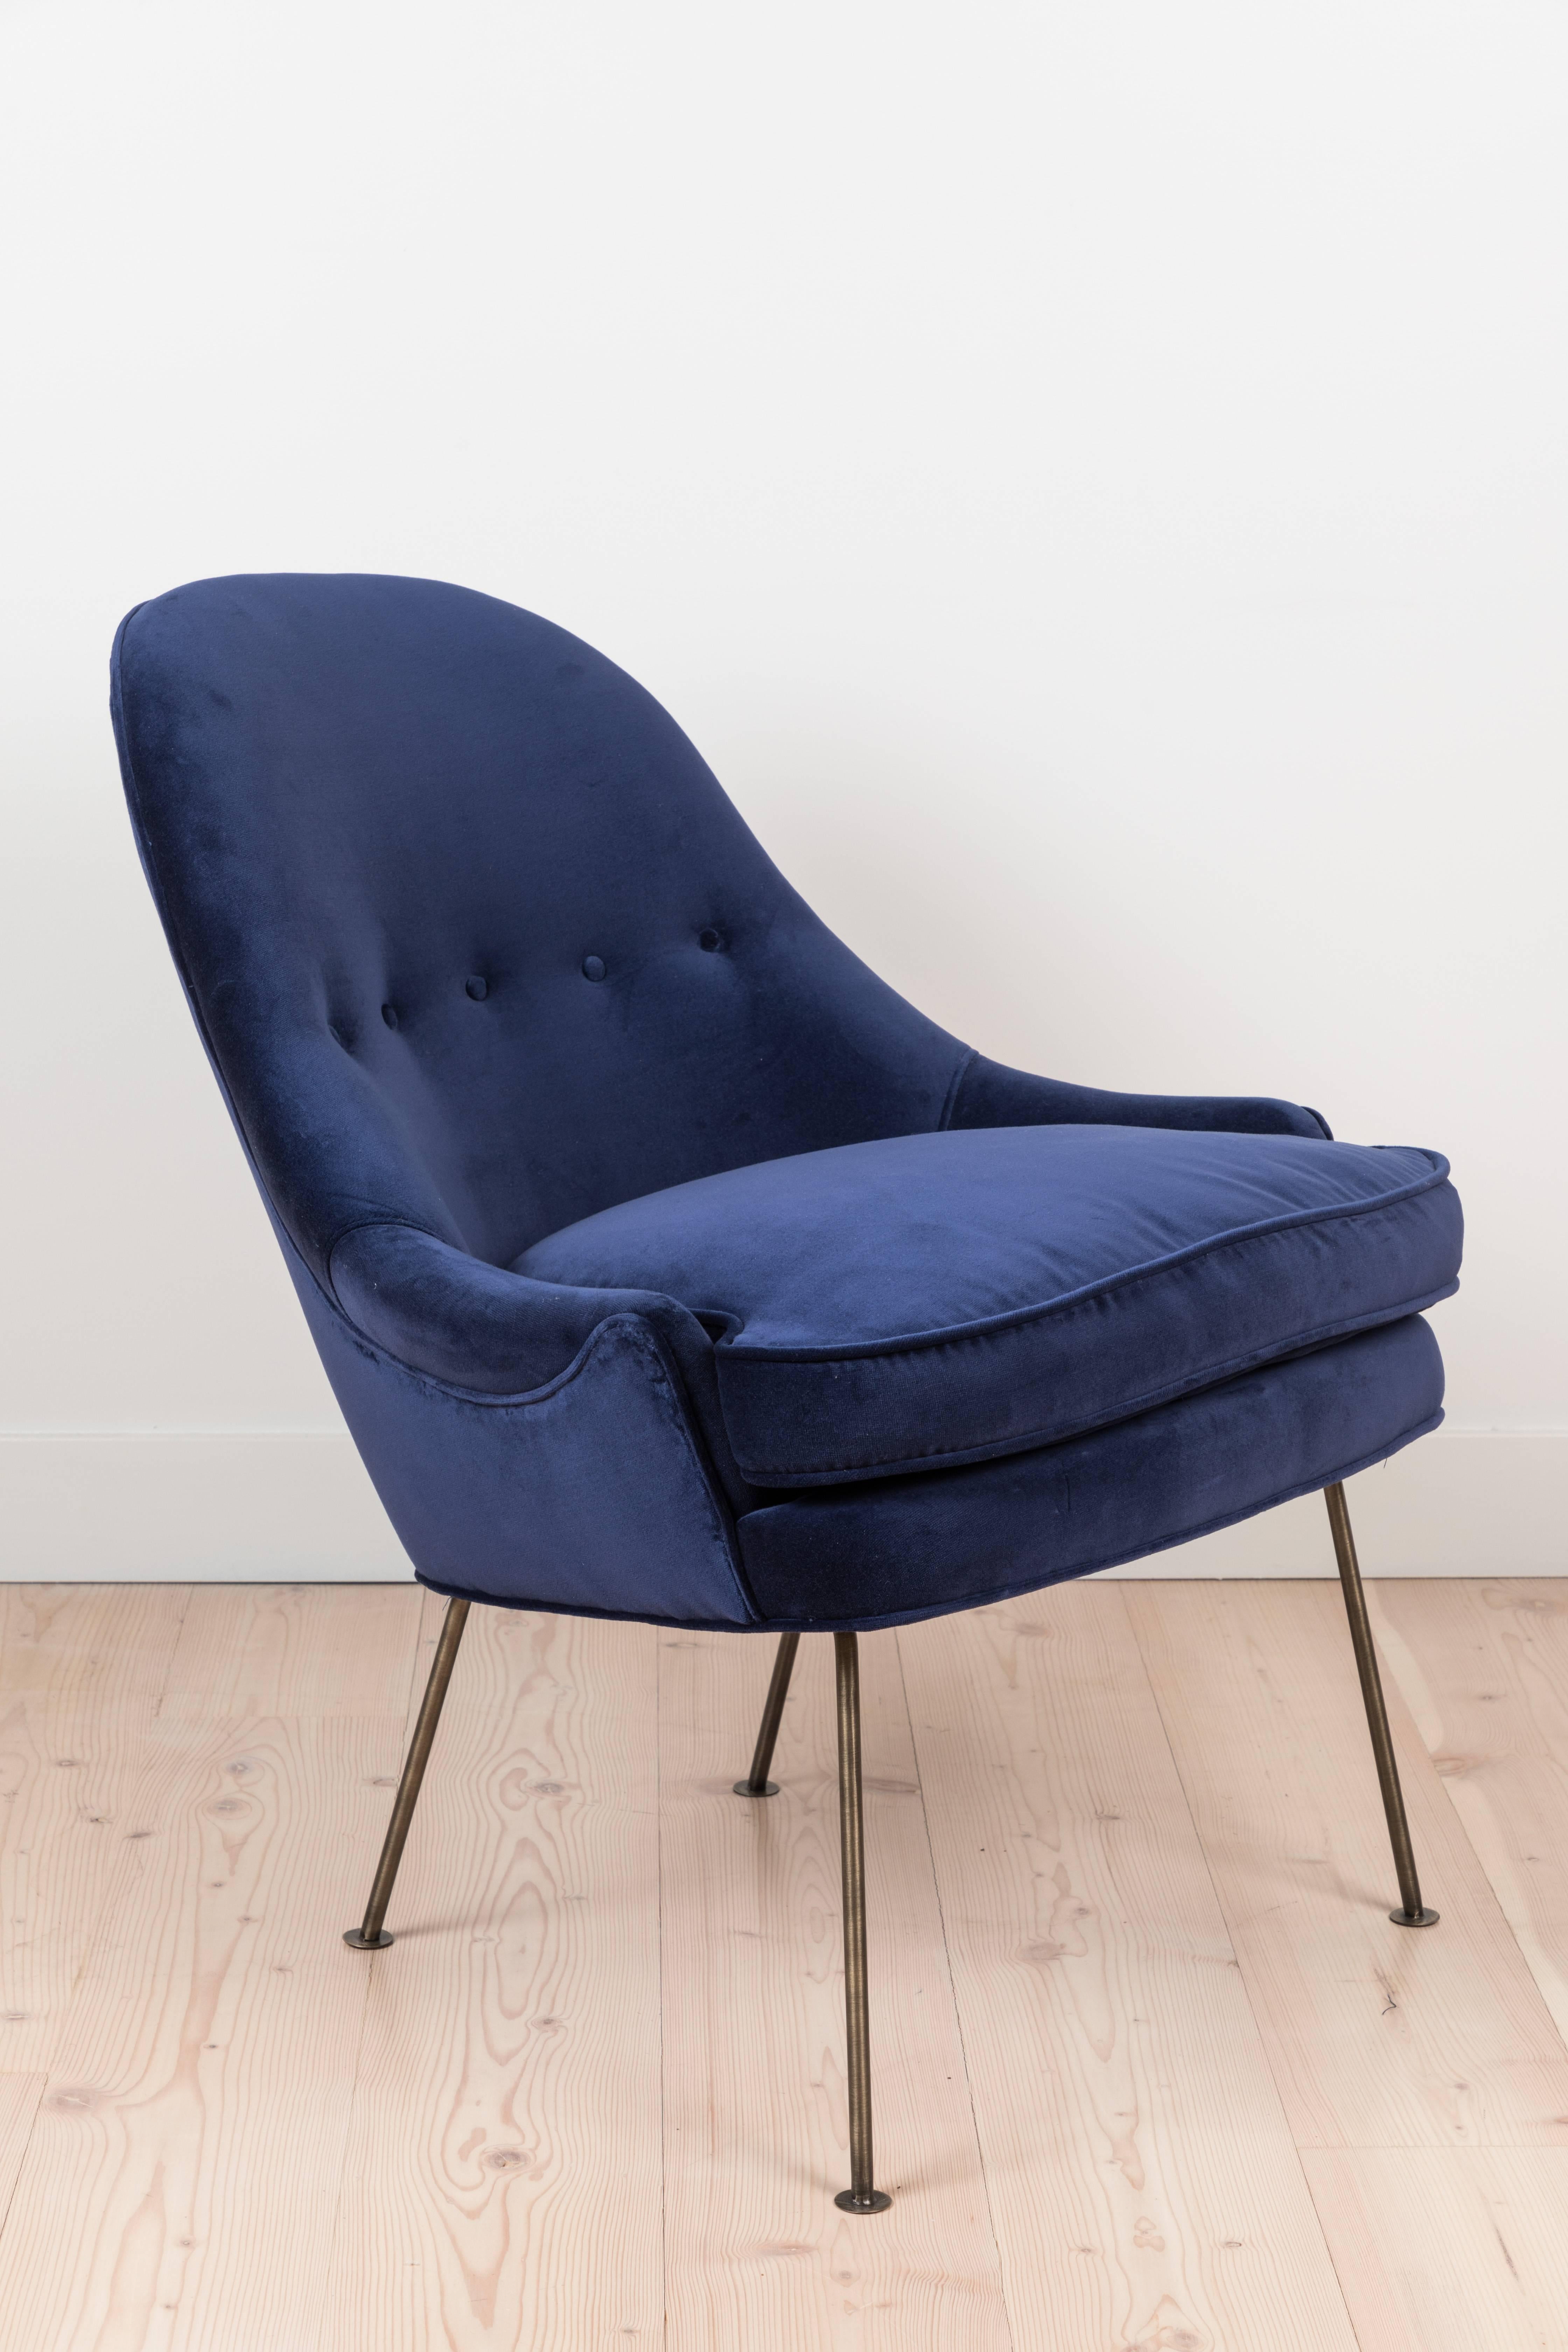 Mid-Century Modern Carthay Chair in Velvet by Lawson-Fenning - In Stock